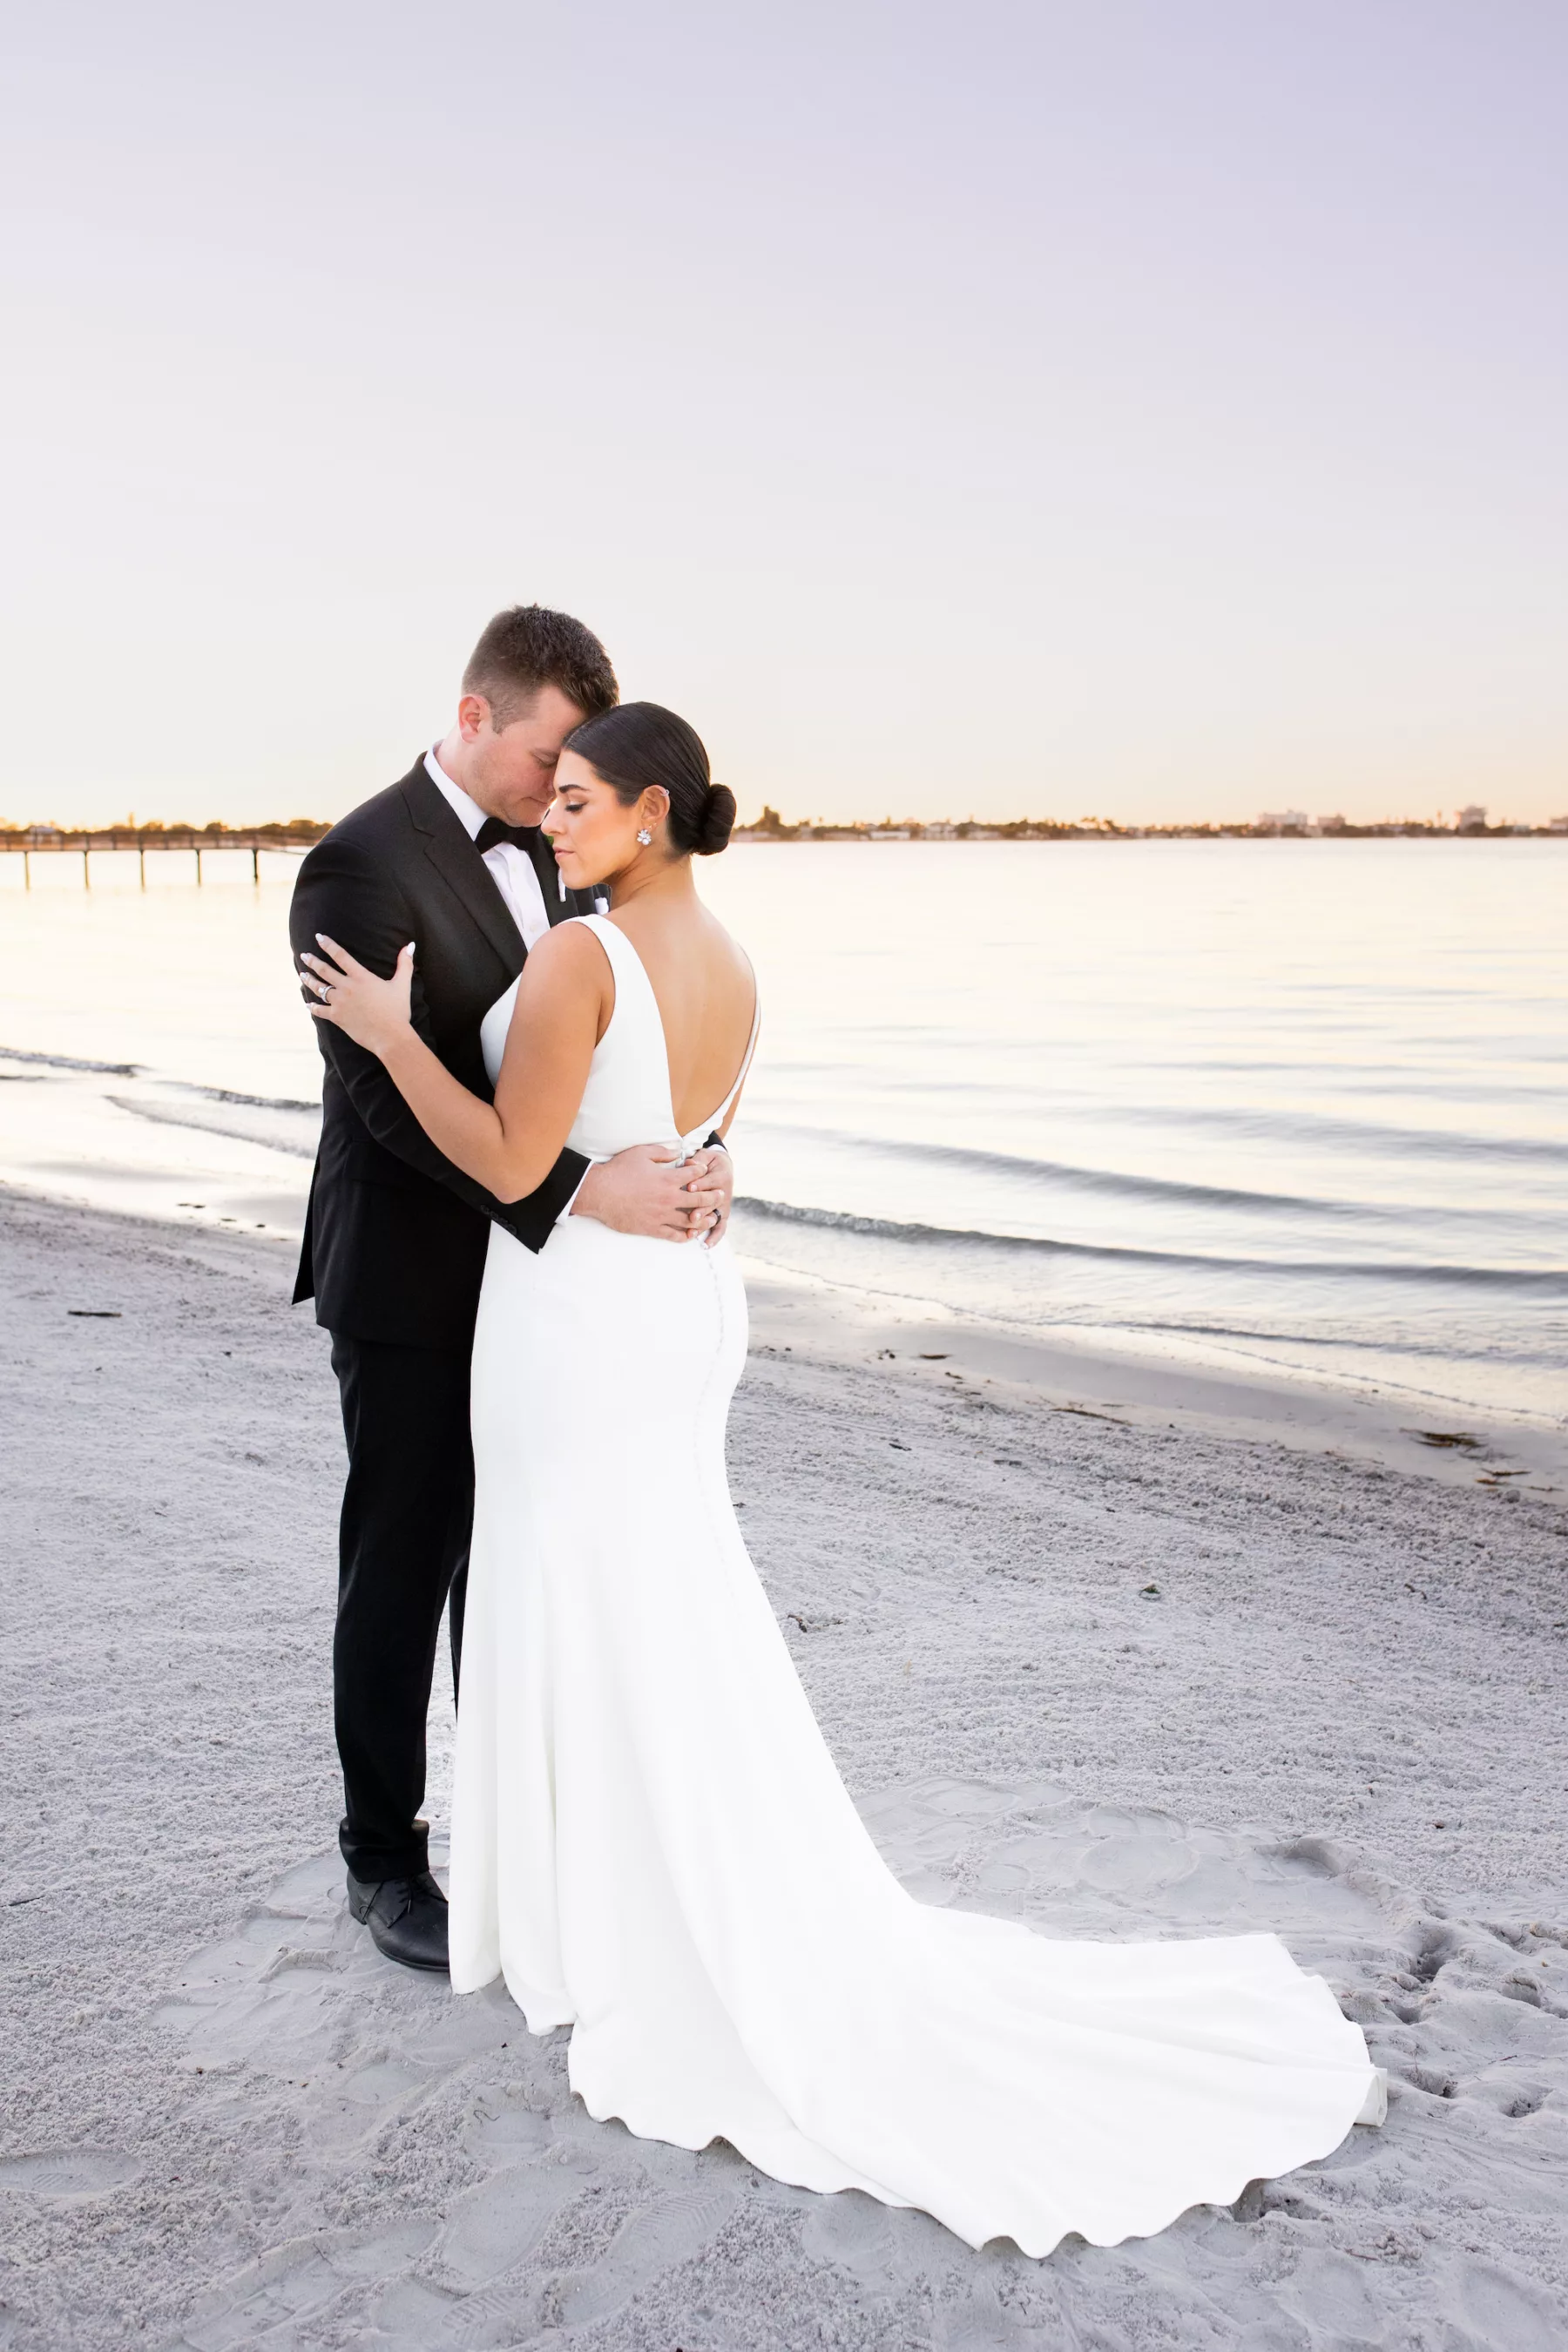 Romantic Bride and Groom Sunset Wedding Portrait | Modern White Mermaid Wedding Dress Ideas